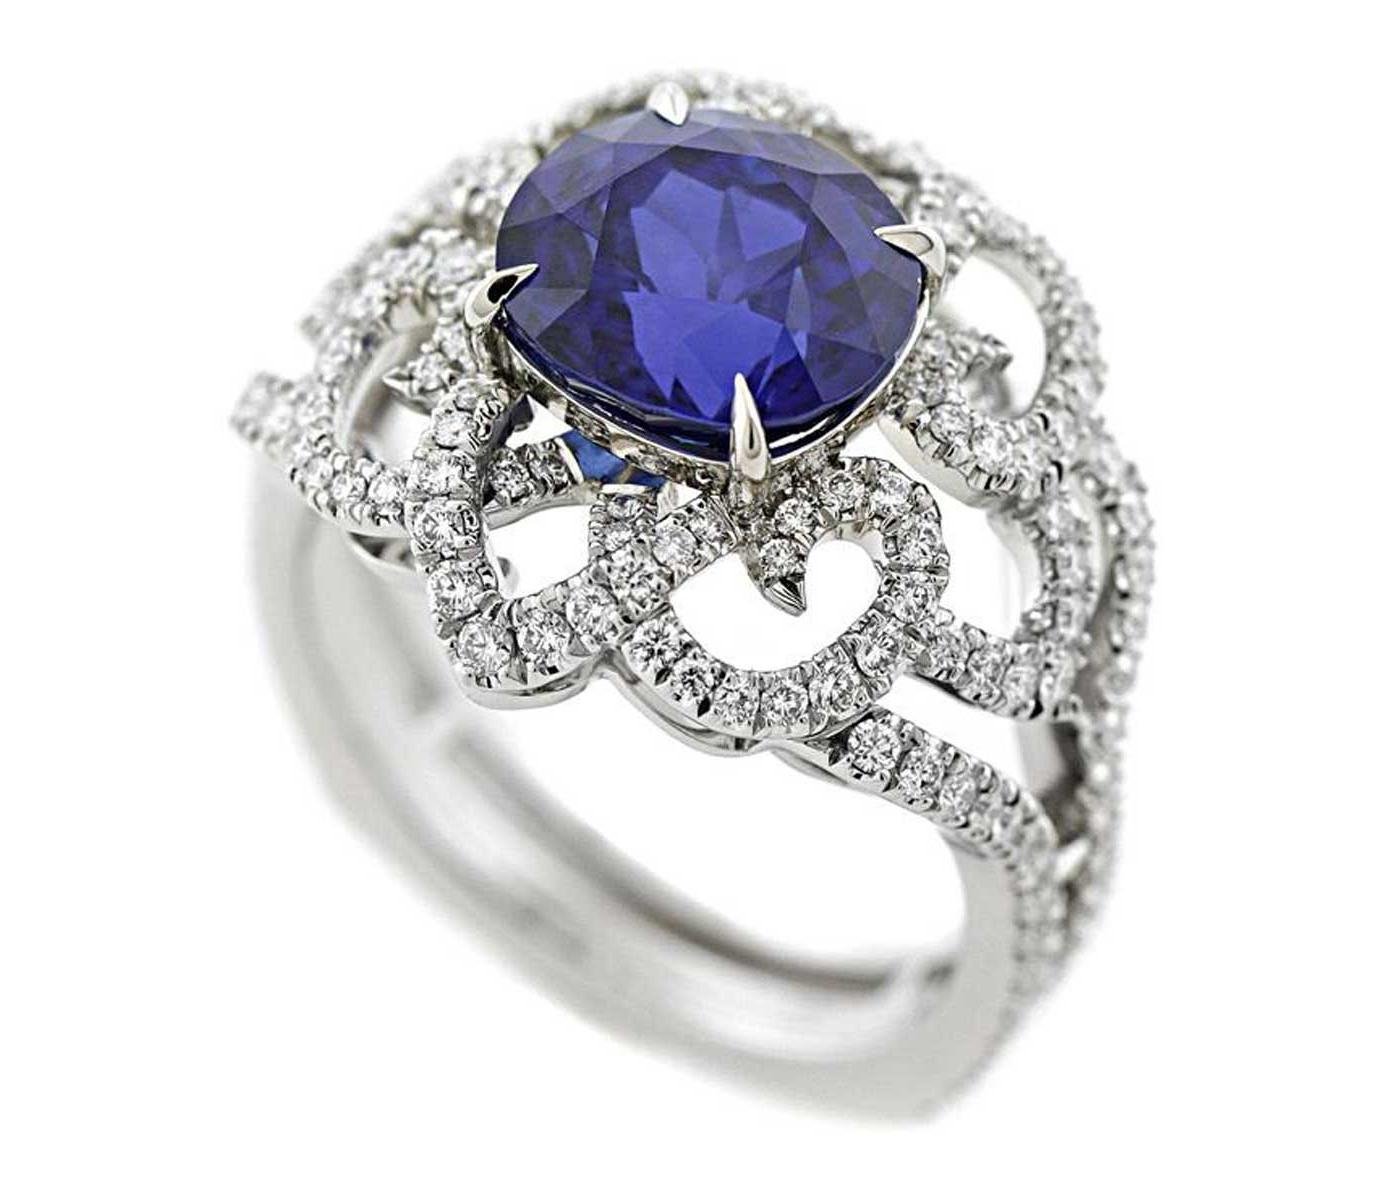 Ring by Richard Krementz Gemstones